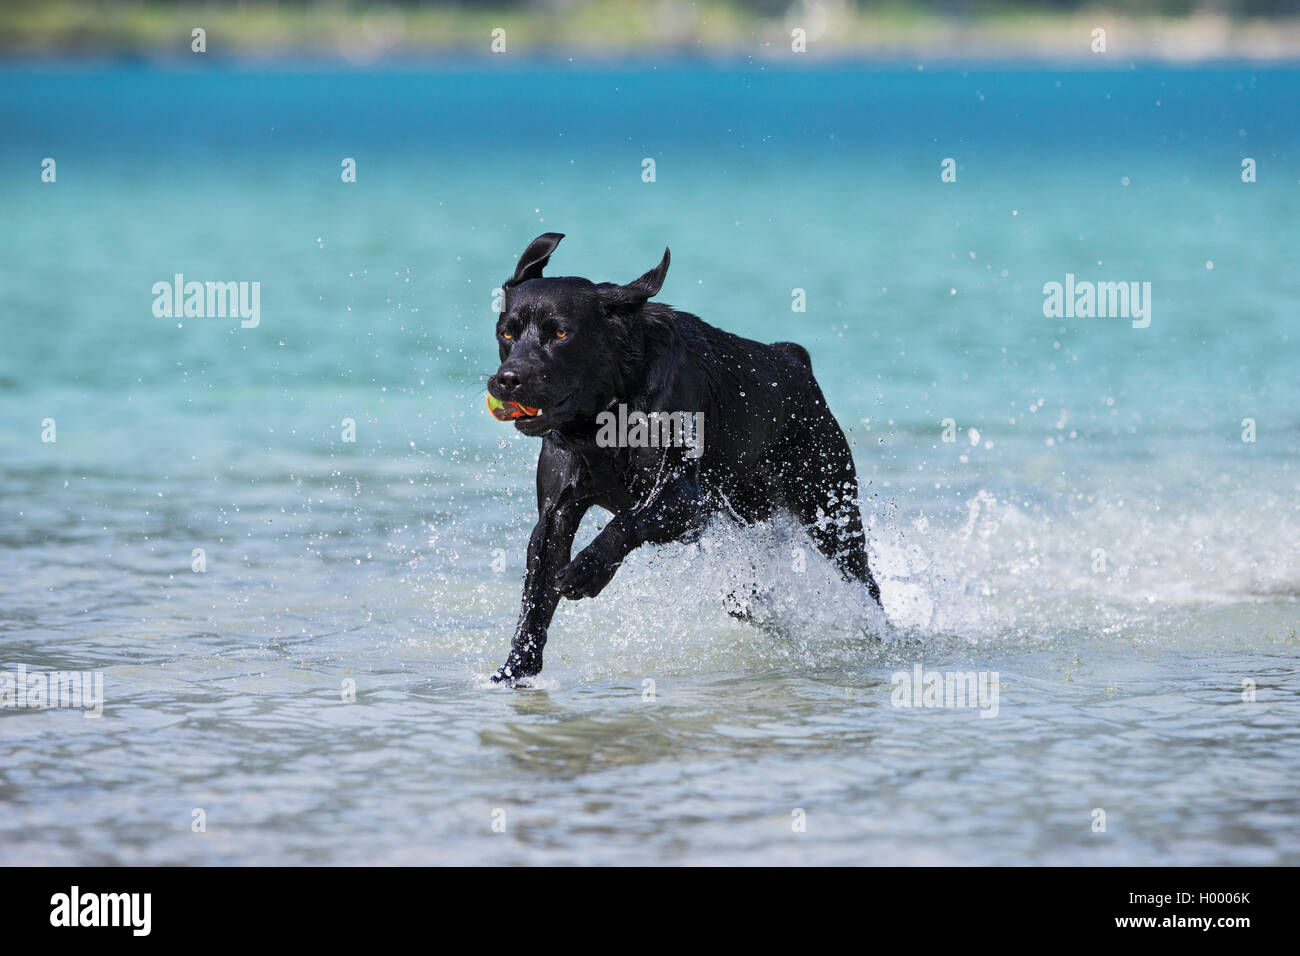 Labrador, black, running through water, Tyrol, Austria Stock Photo